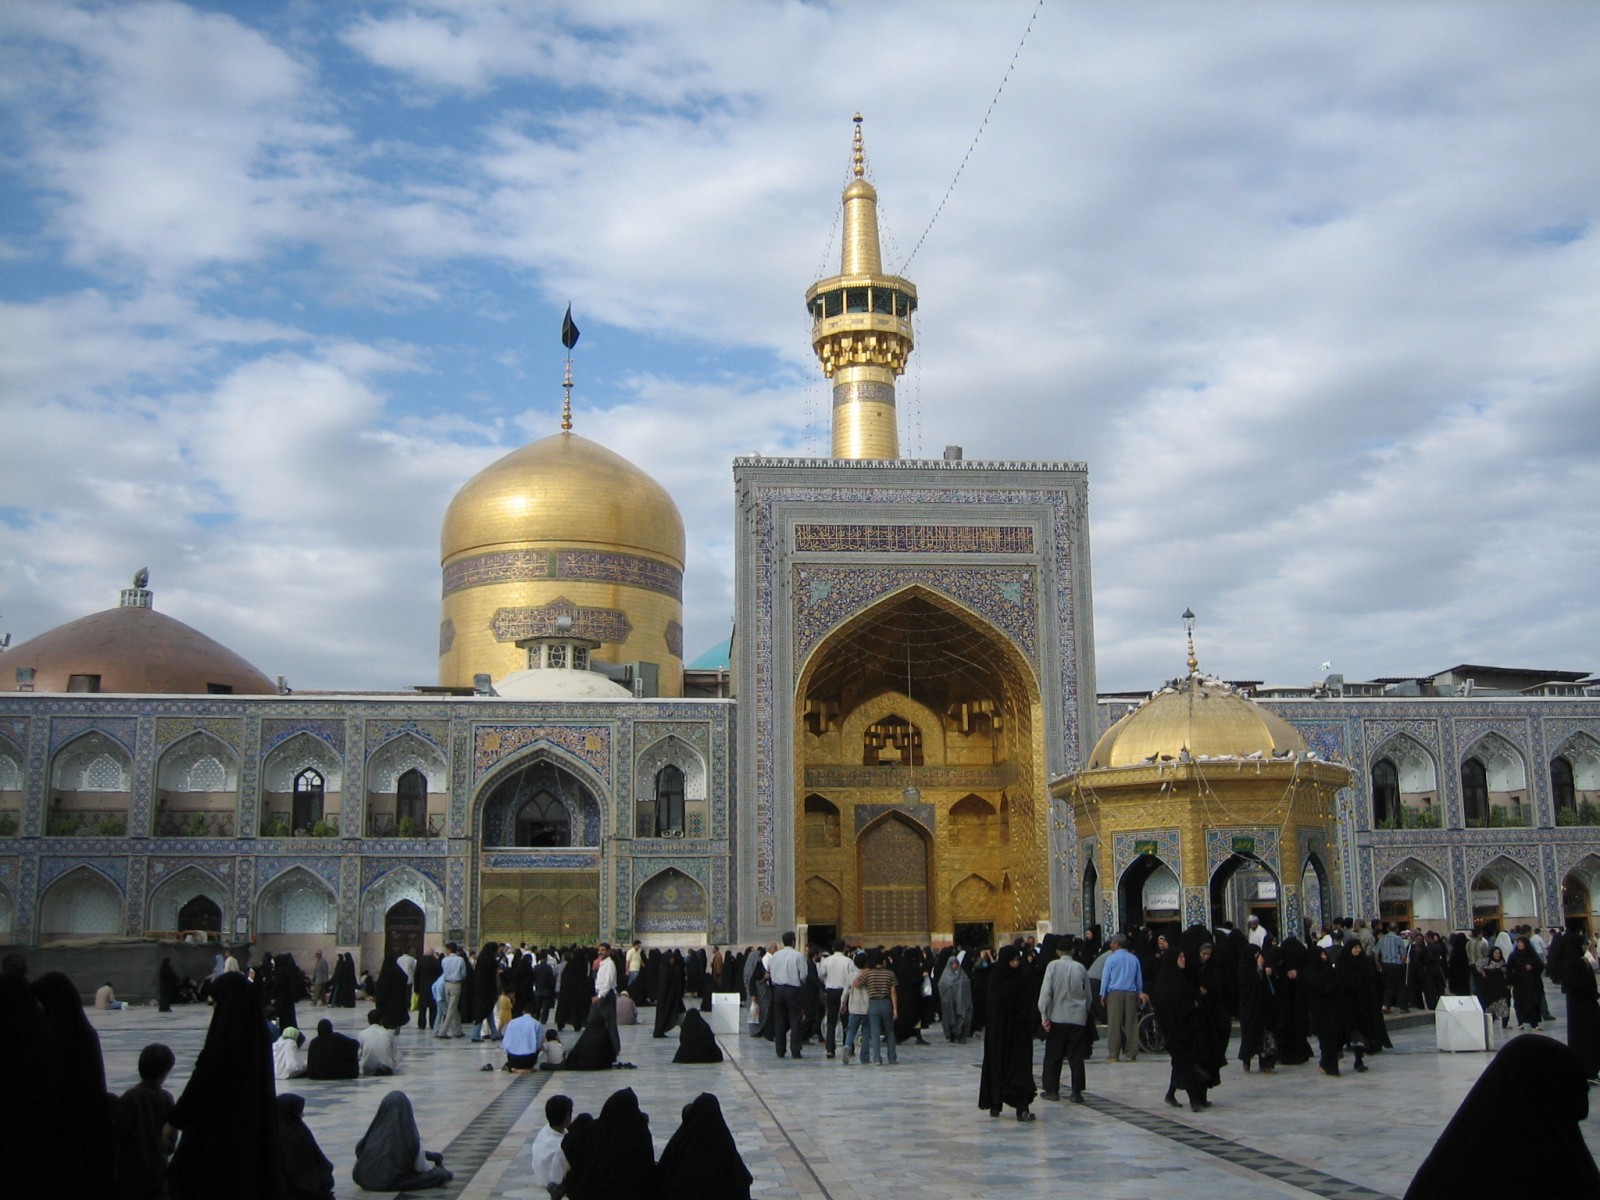 Mashhad city most popular for tourists visiting Iran